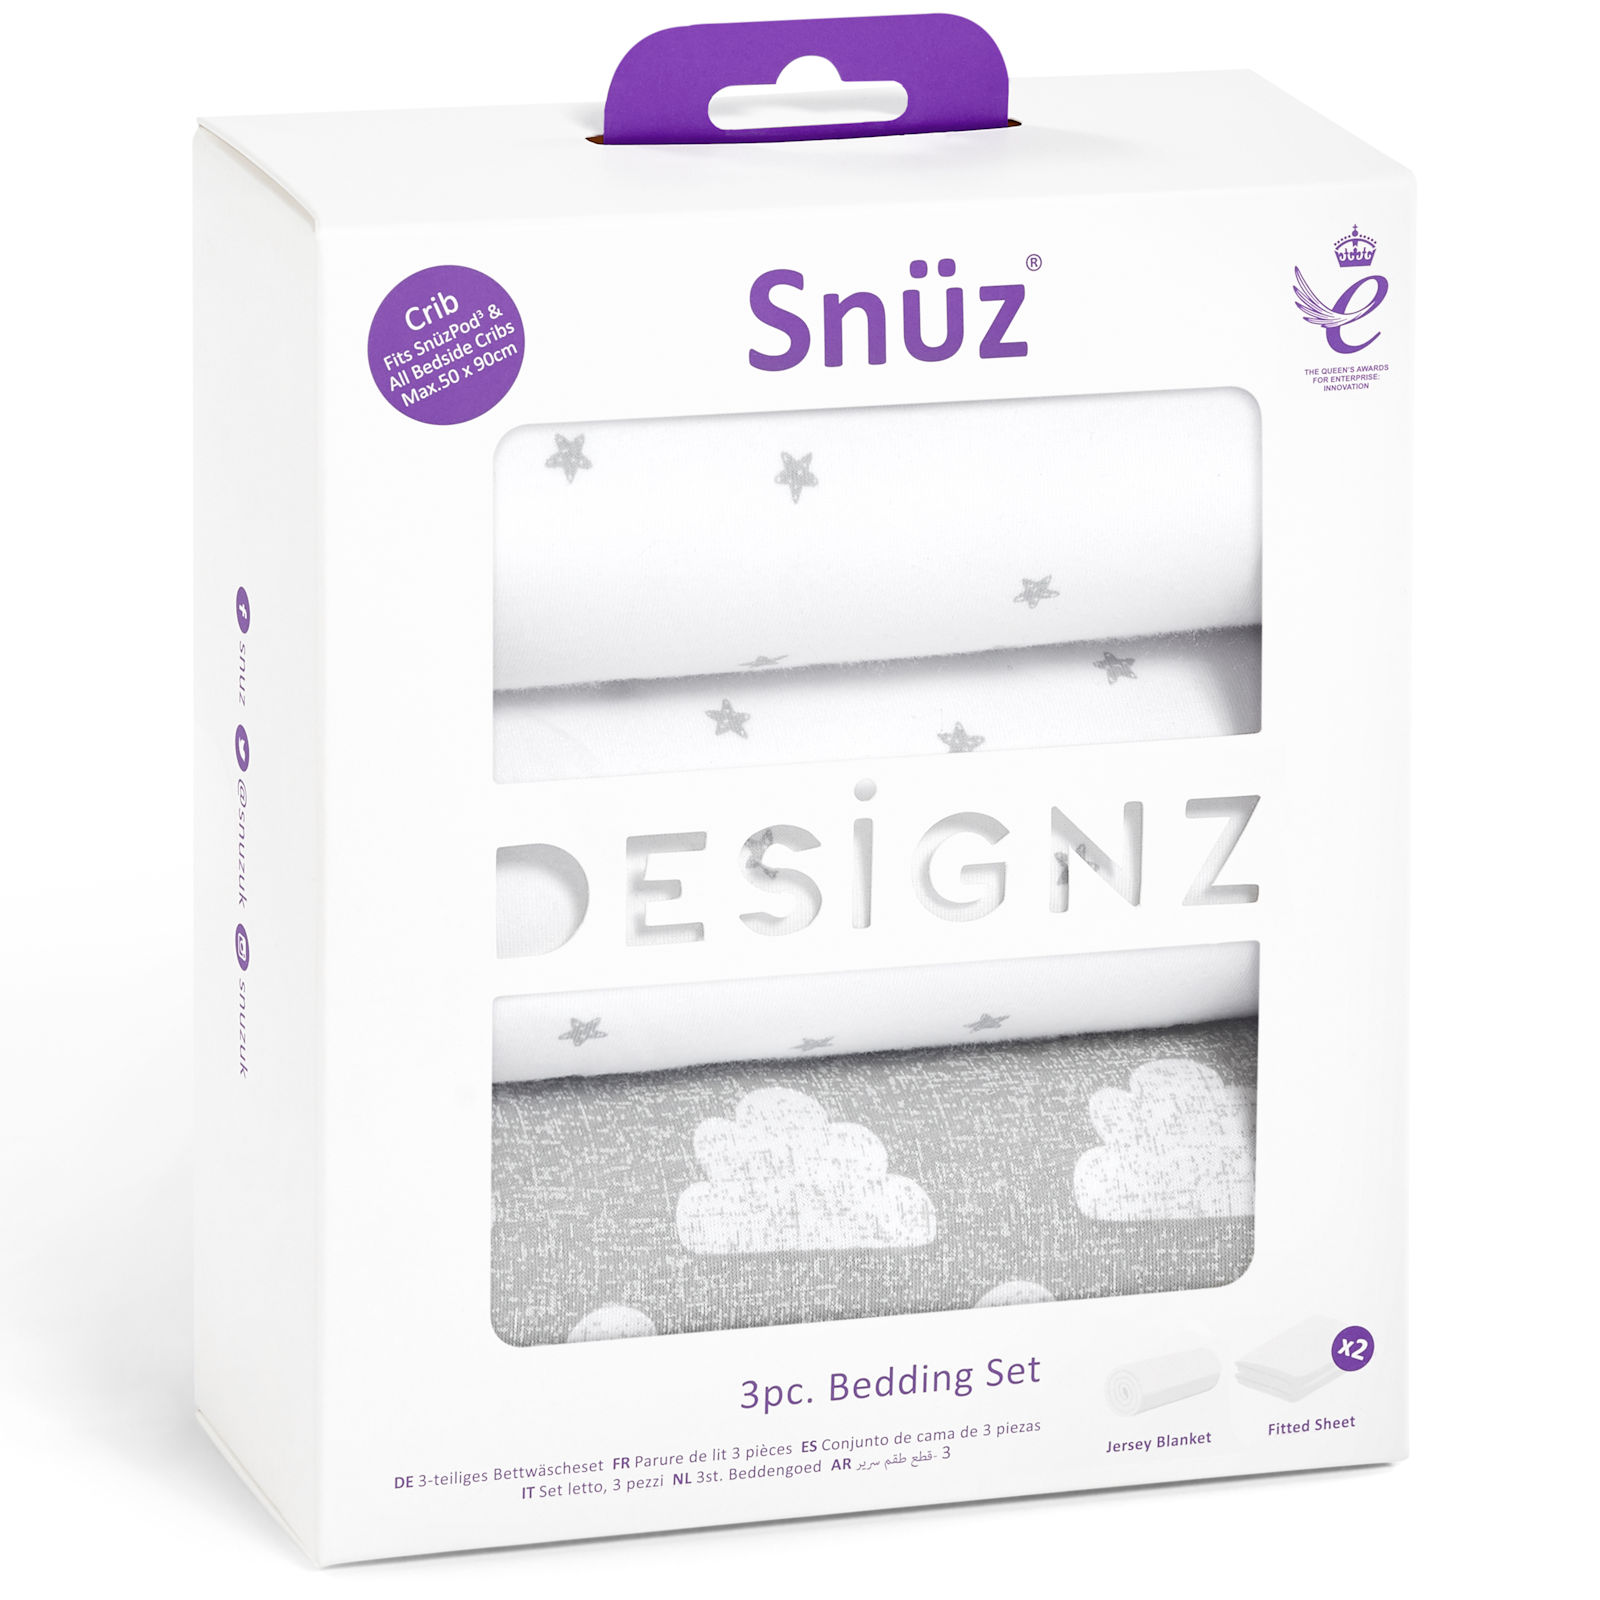 Snuz 3 Piece Crib Bedding Set - Cloud Nine